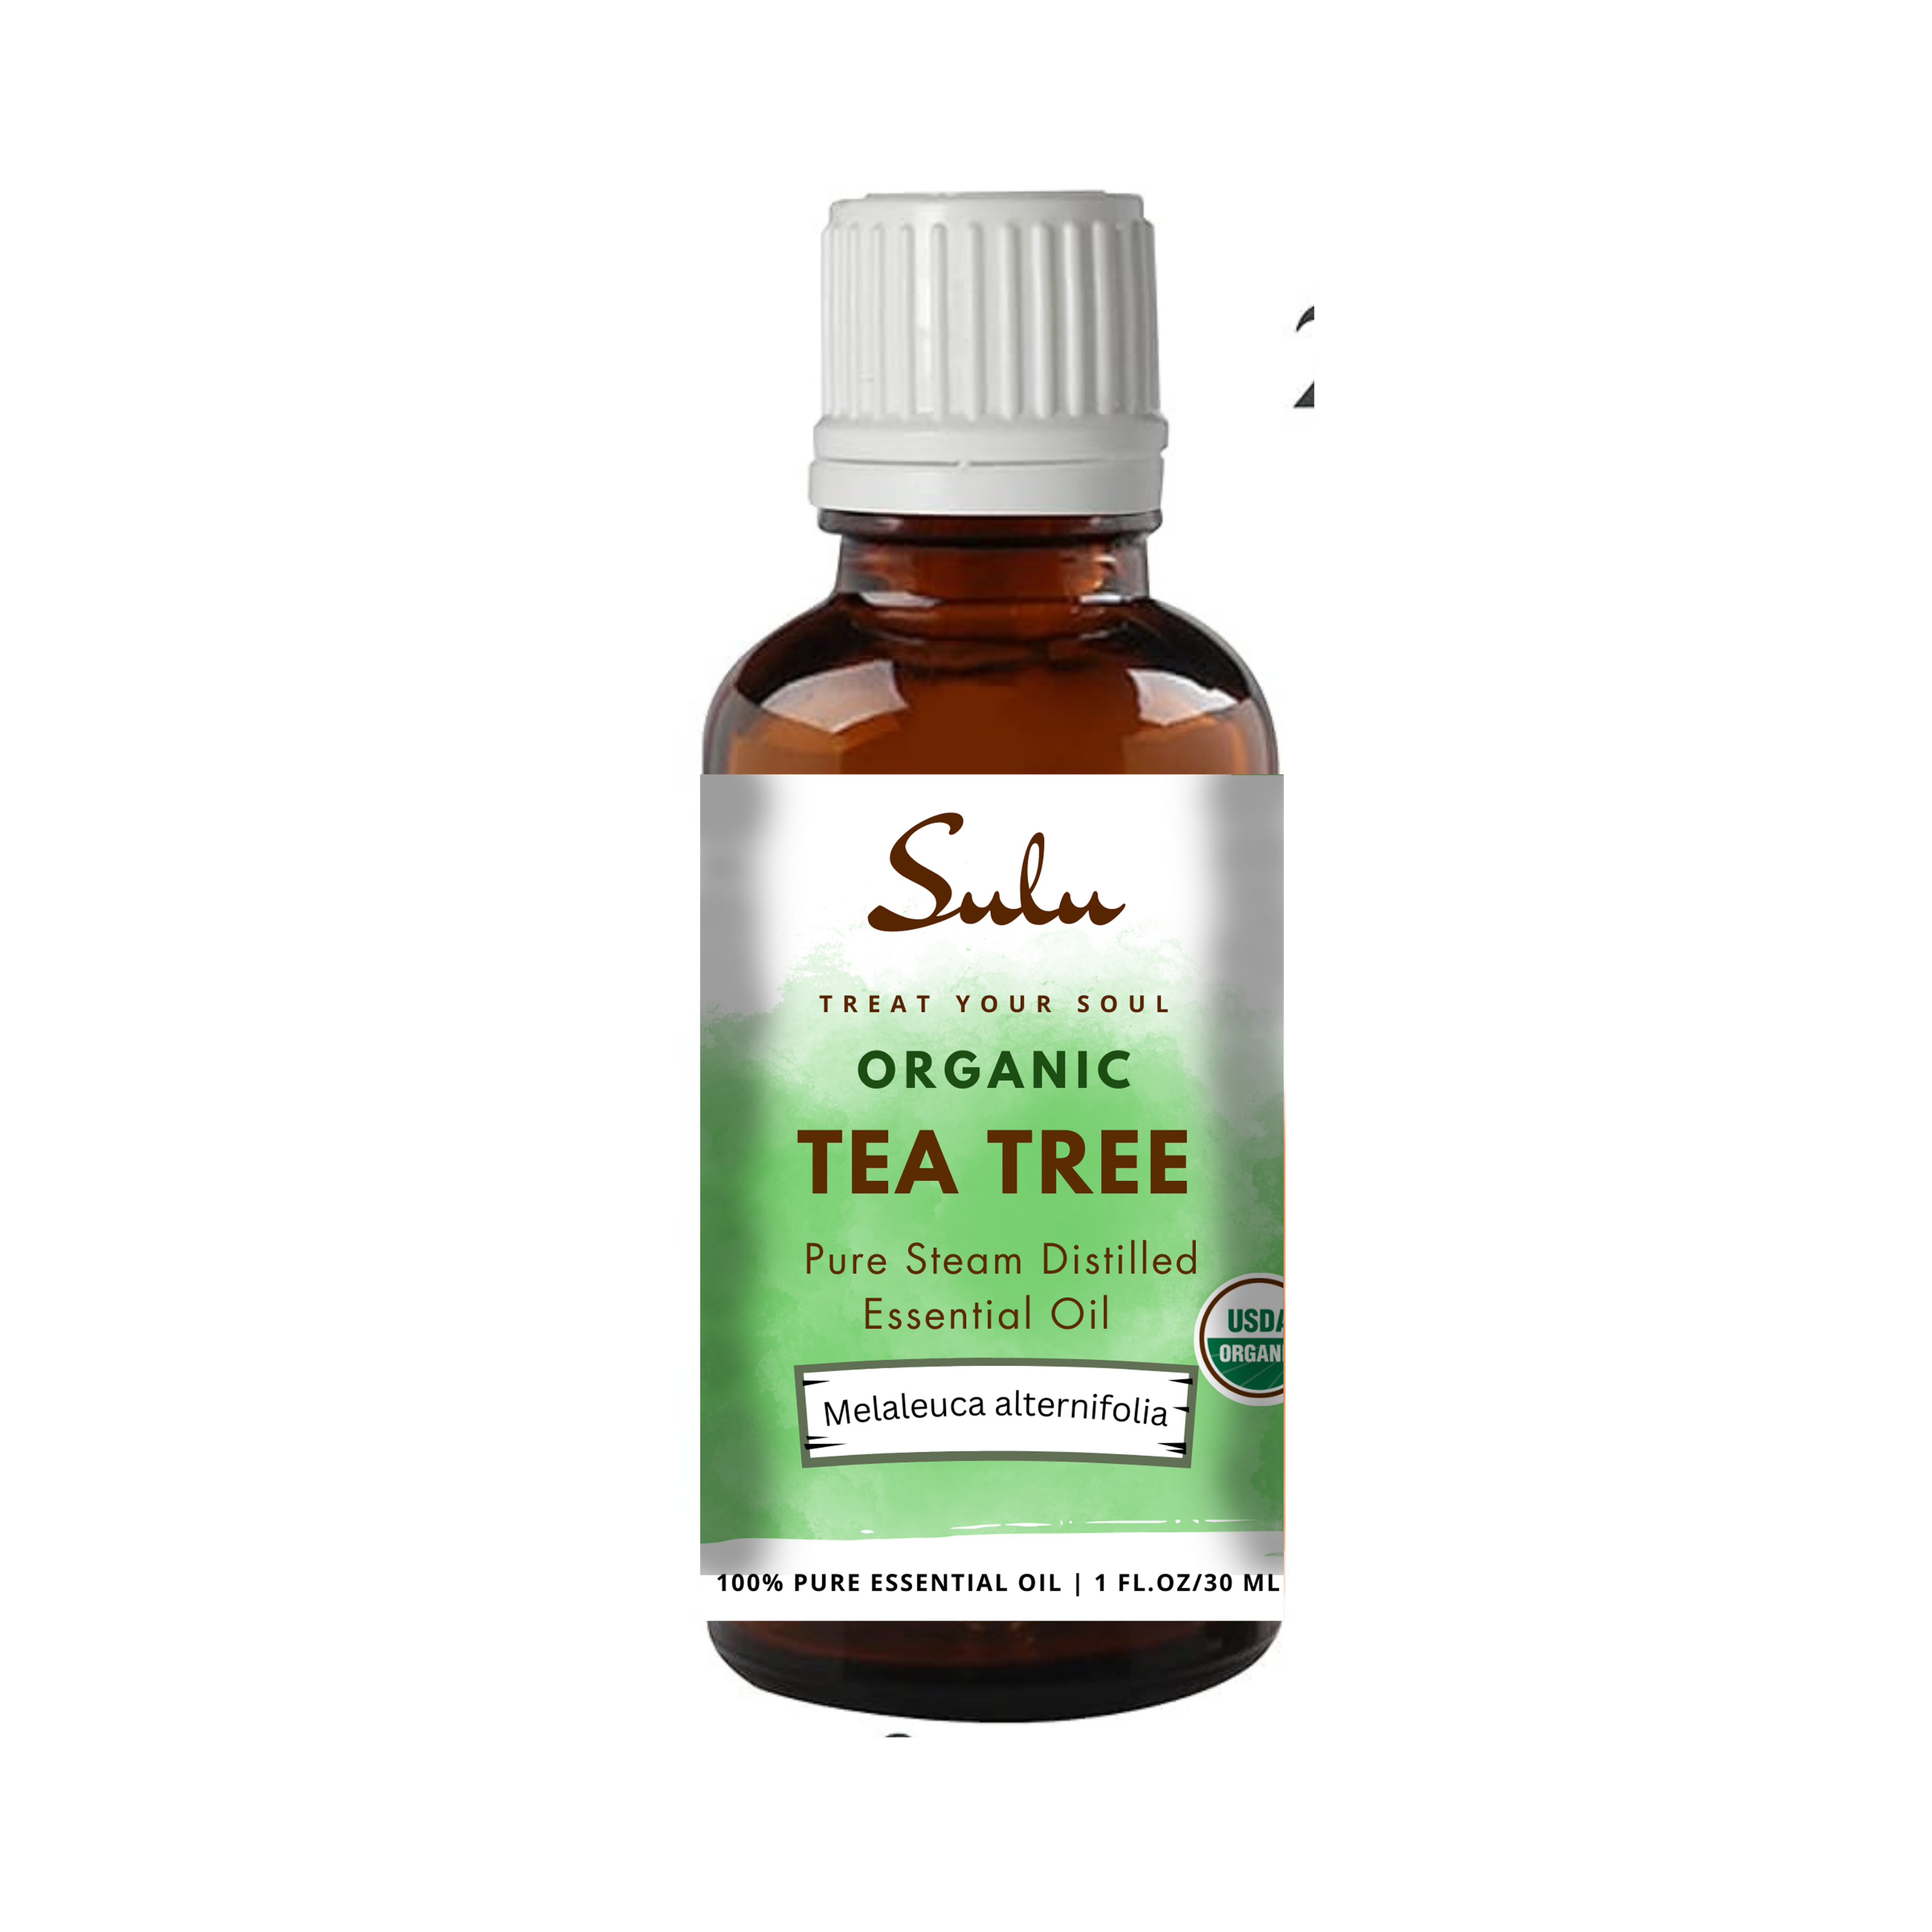 artnaturals 100% Pure Tea Tree Essential Oil - (.33 Fl Oz / 10ml) - Natural  Premium Melaleuca Therapeutic Grade - Great with Soap and Shampoo, Face